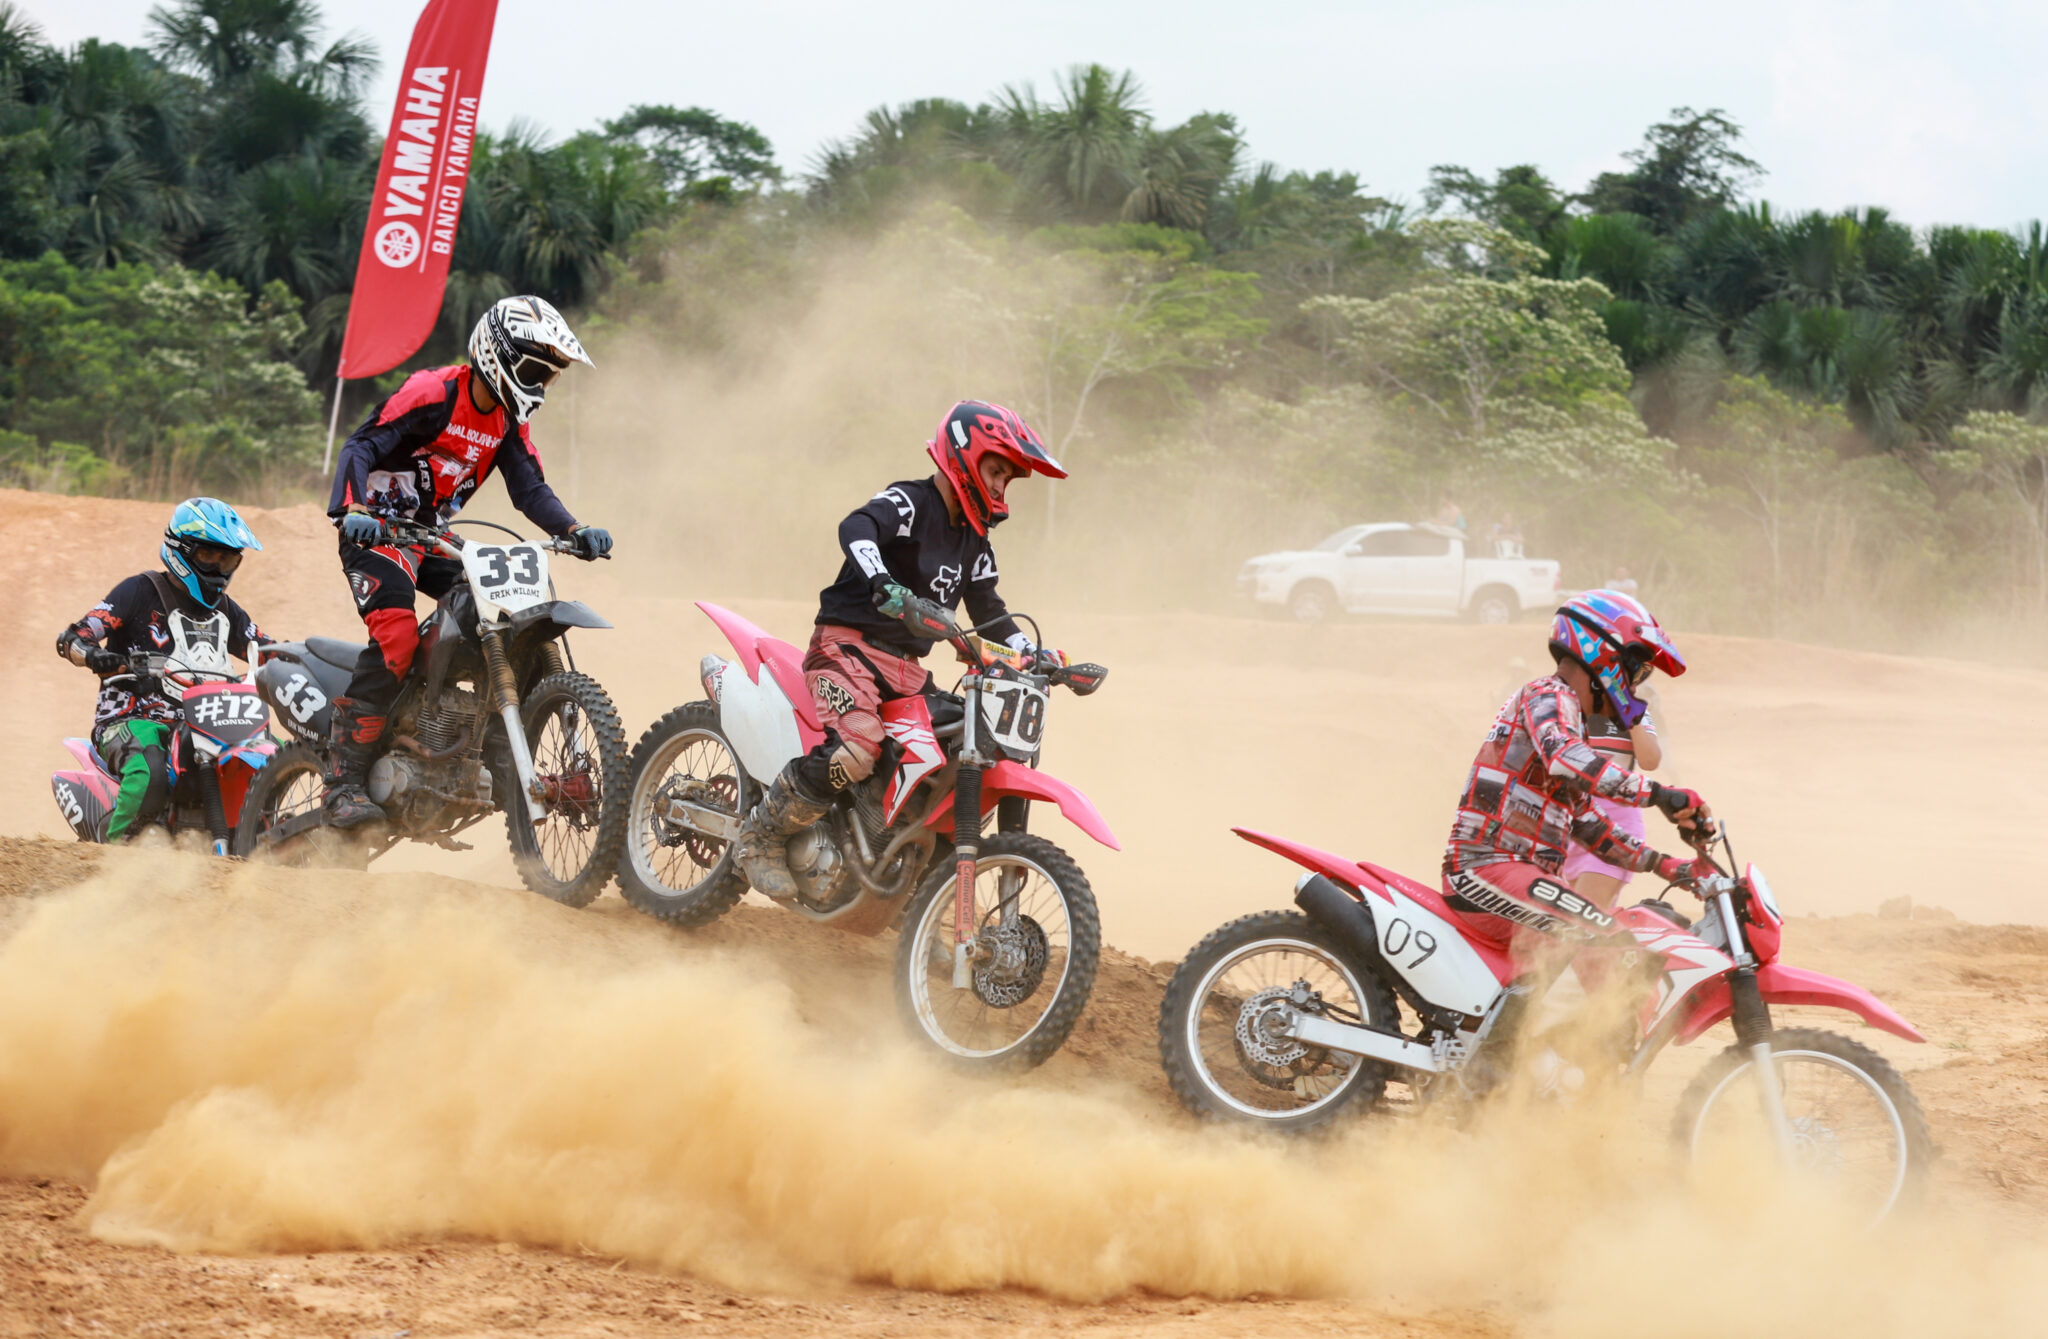 MOTOCROSS: 2ª Etapa do Campeonato Estadual de Motocross acontece em Ariquemes-RO